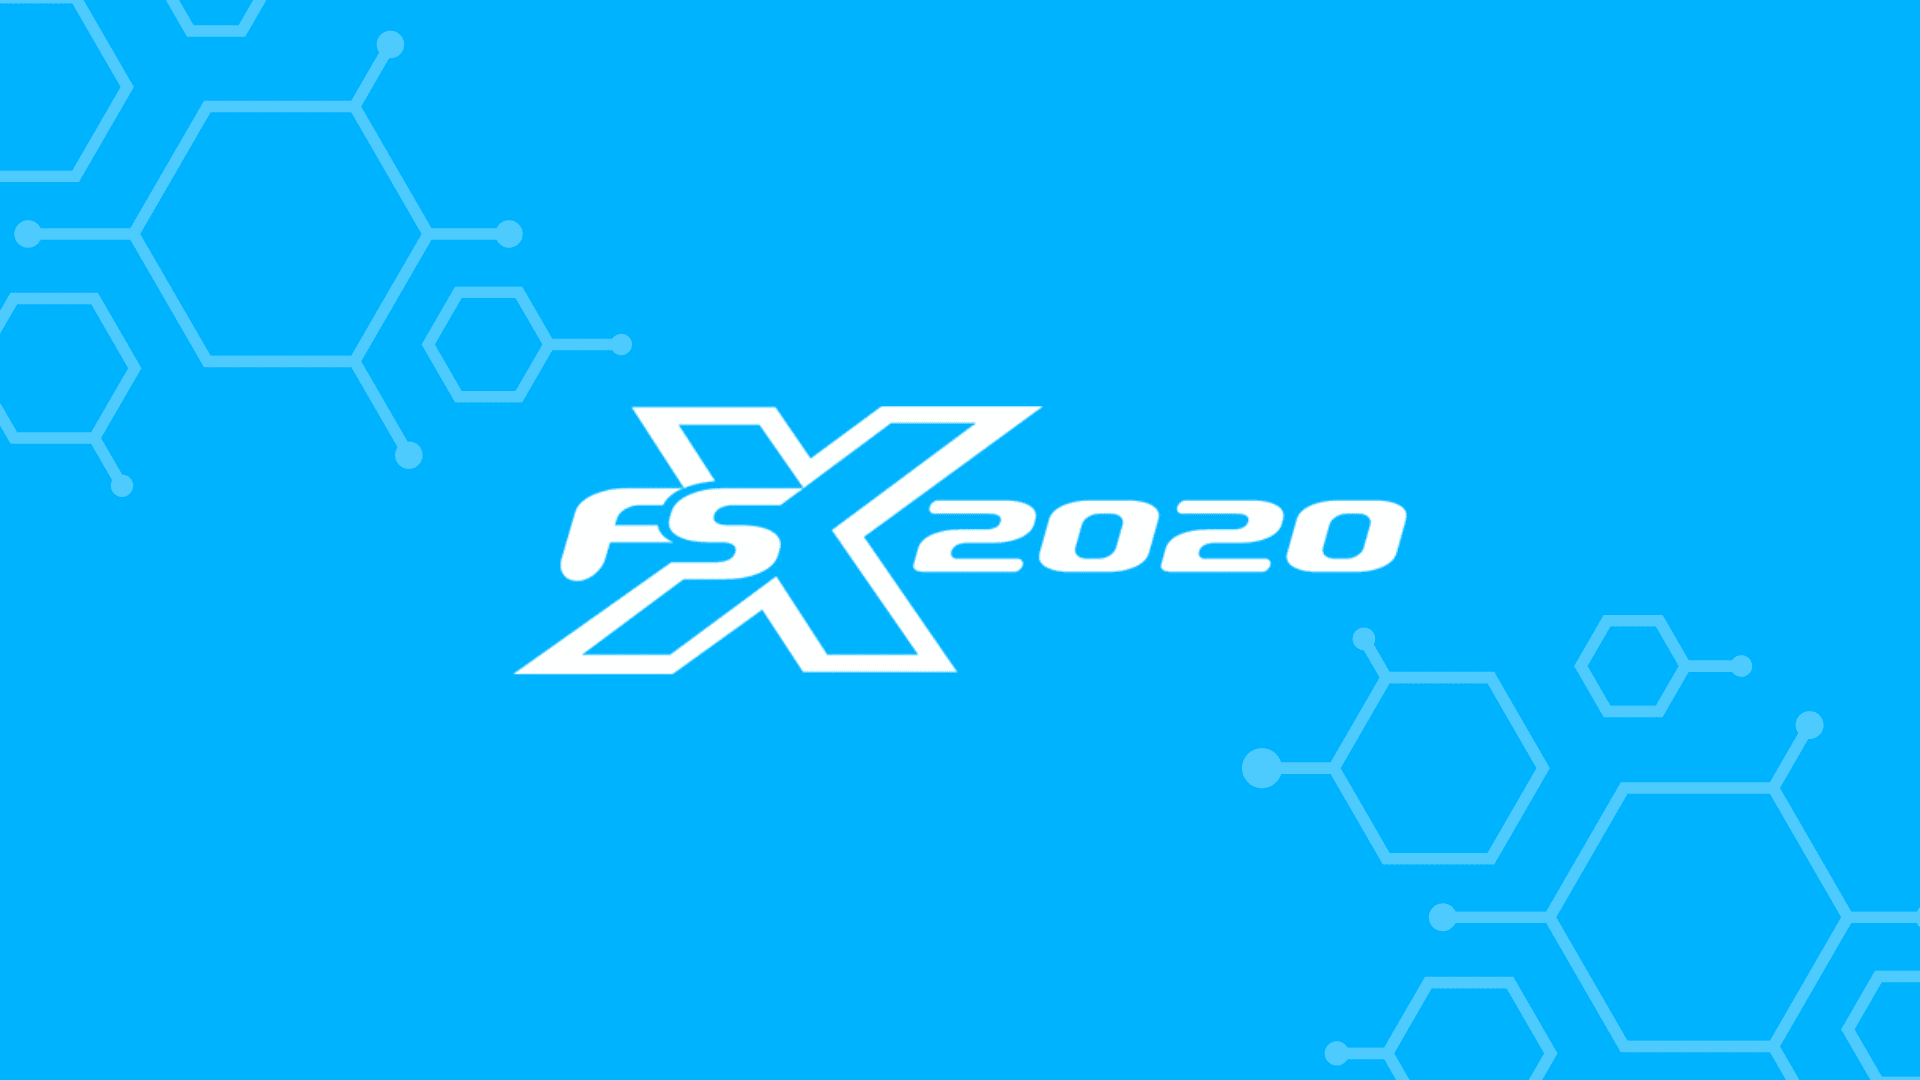 FSX 2020 Logo